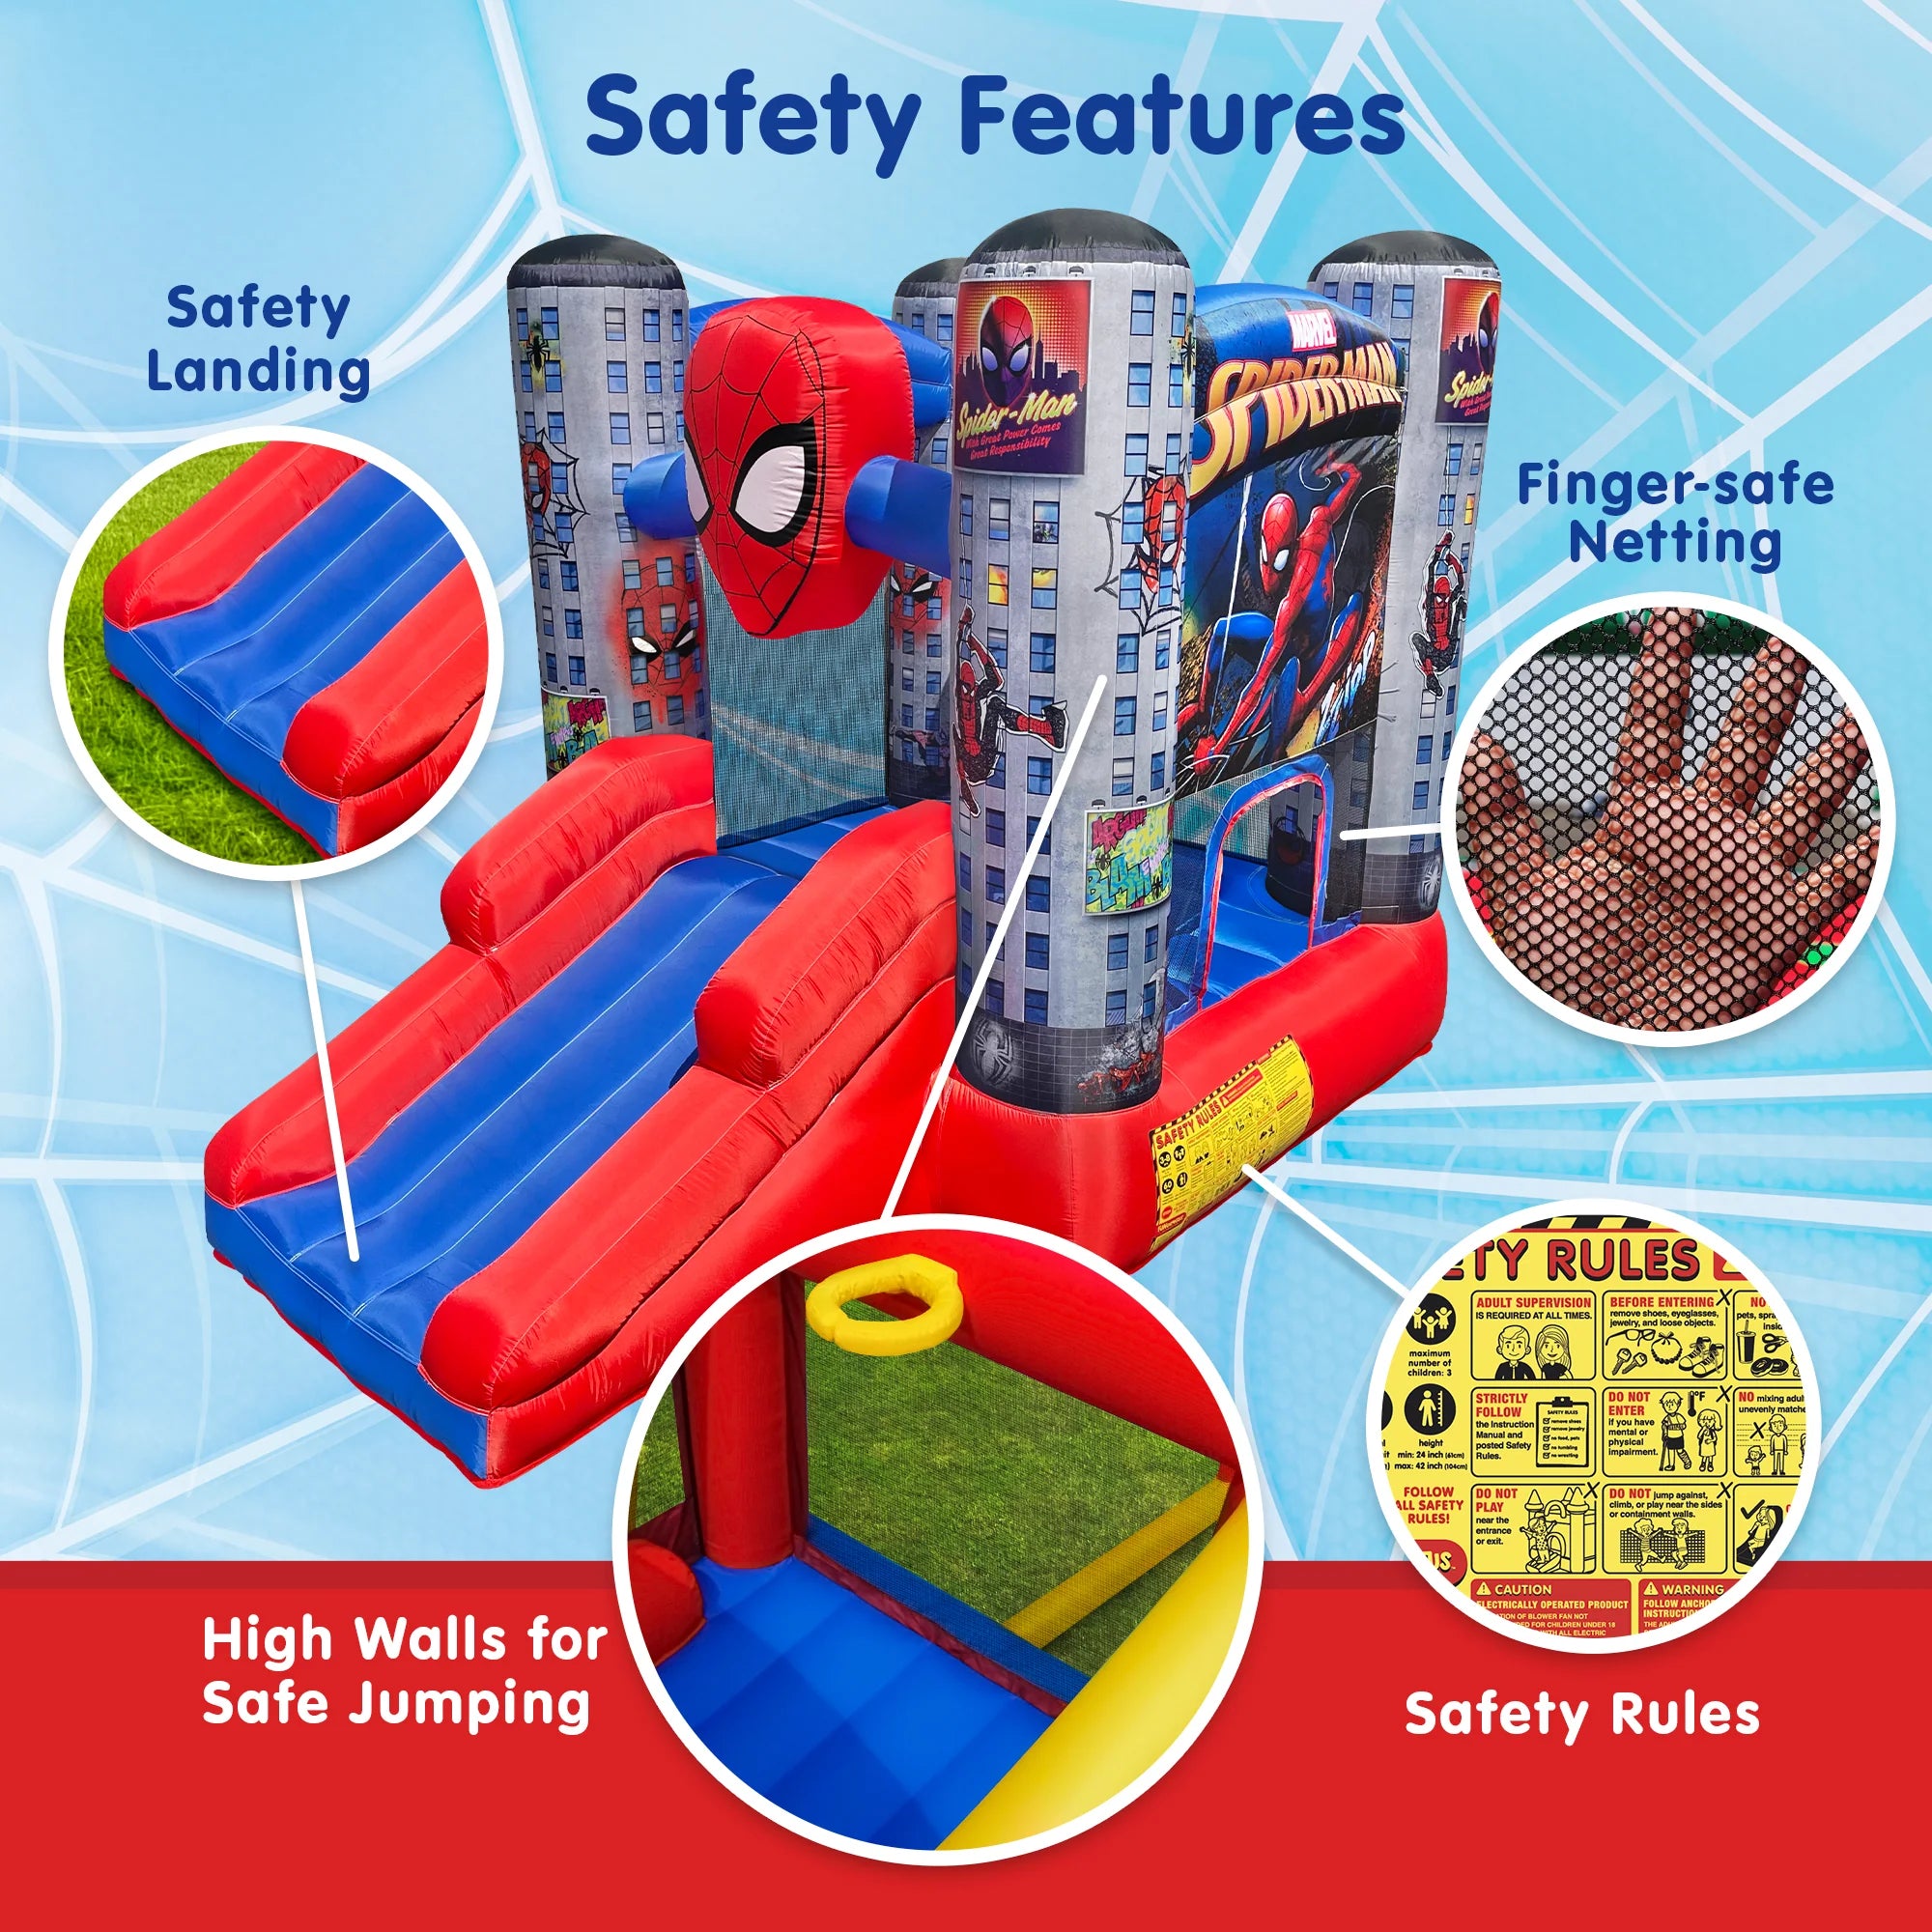 Tobogán inflable Marvel Spiderman Bounce House